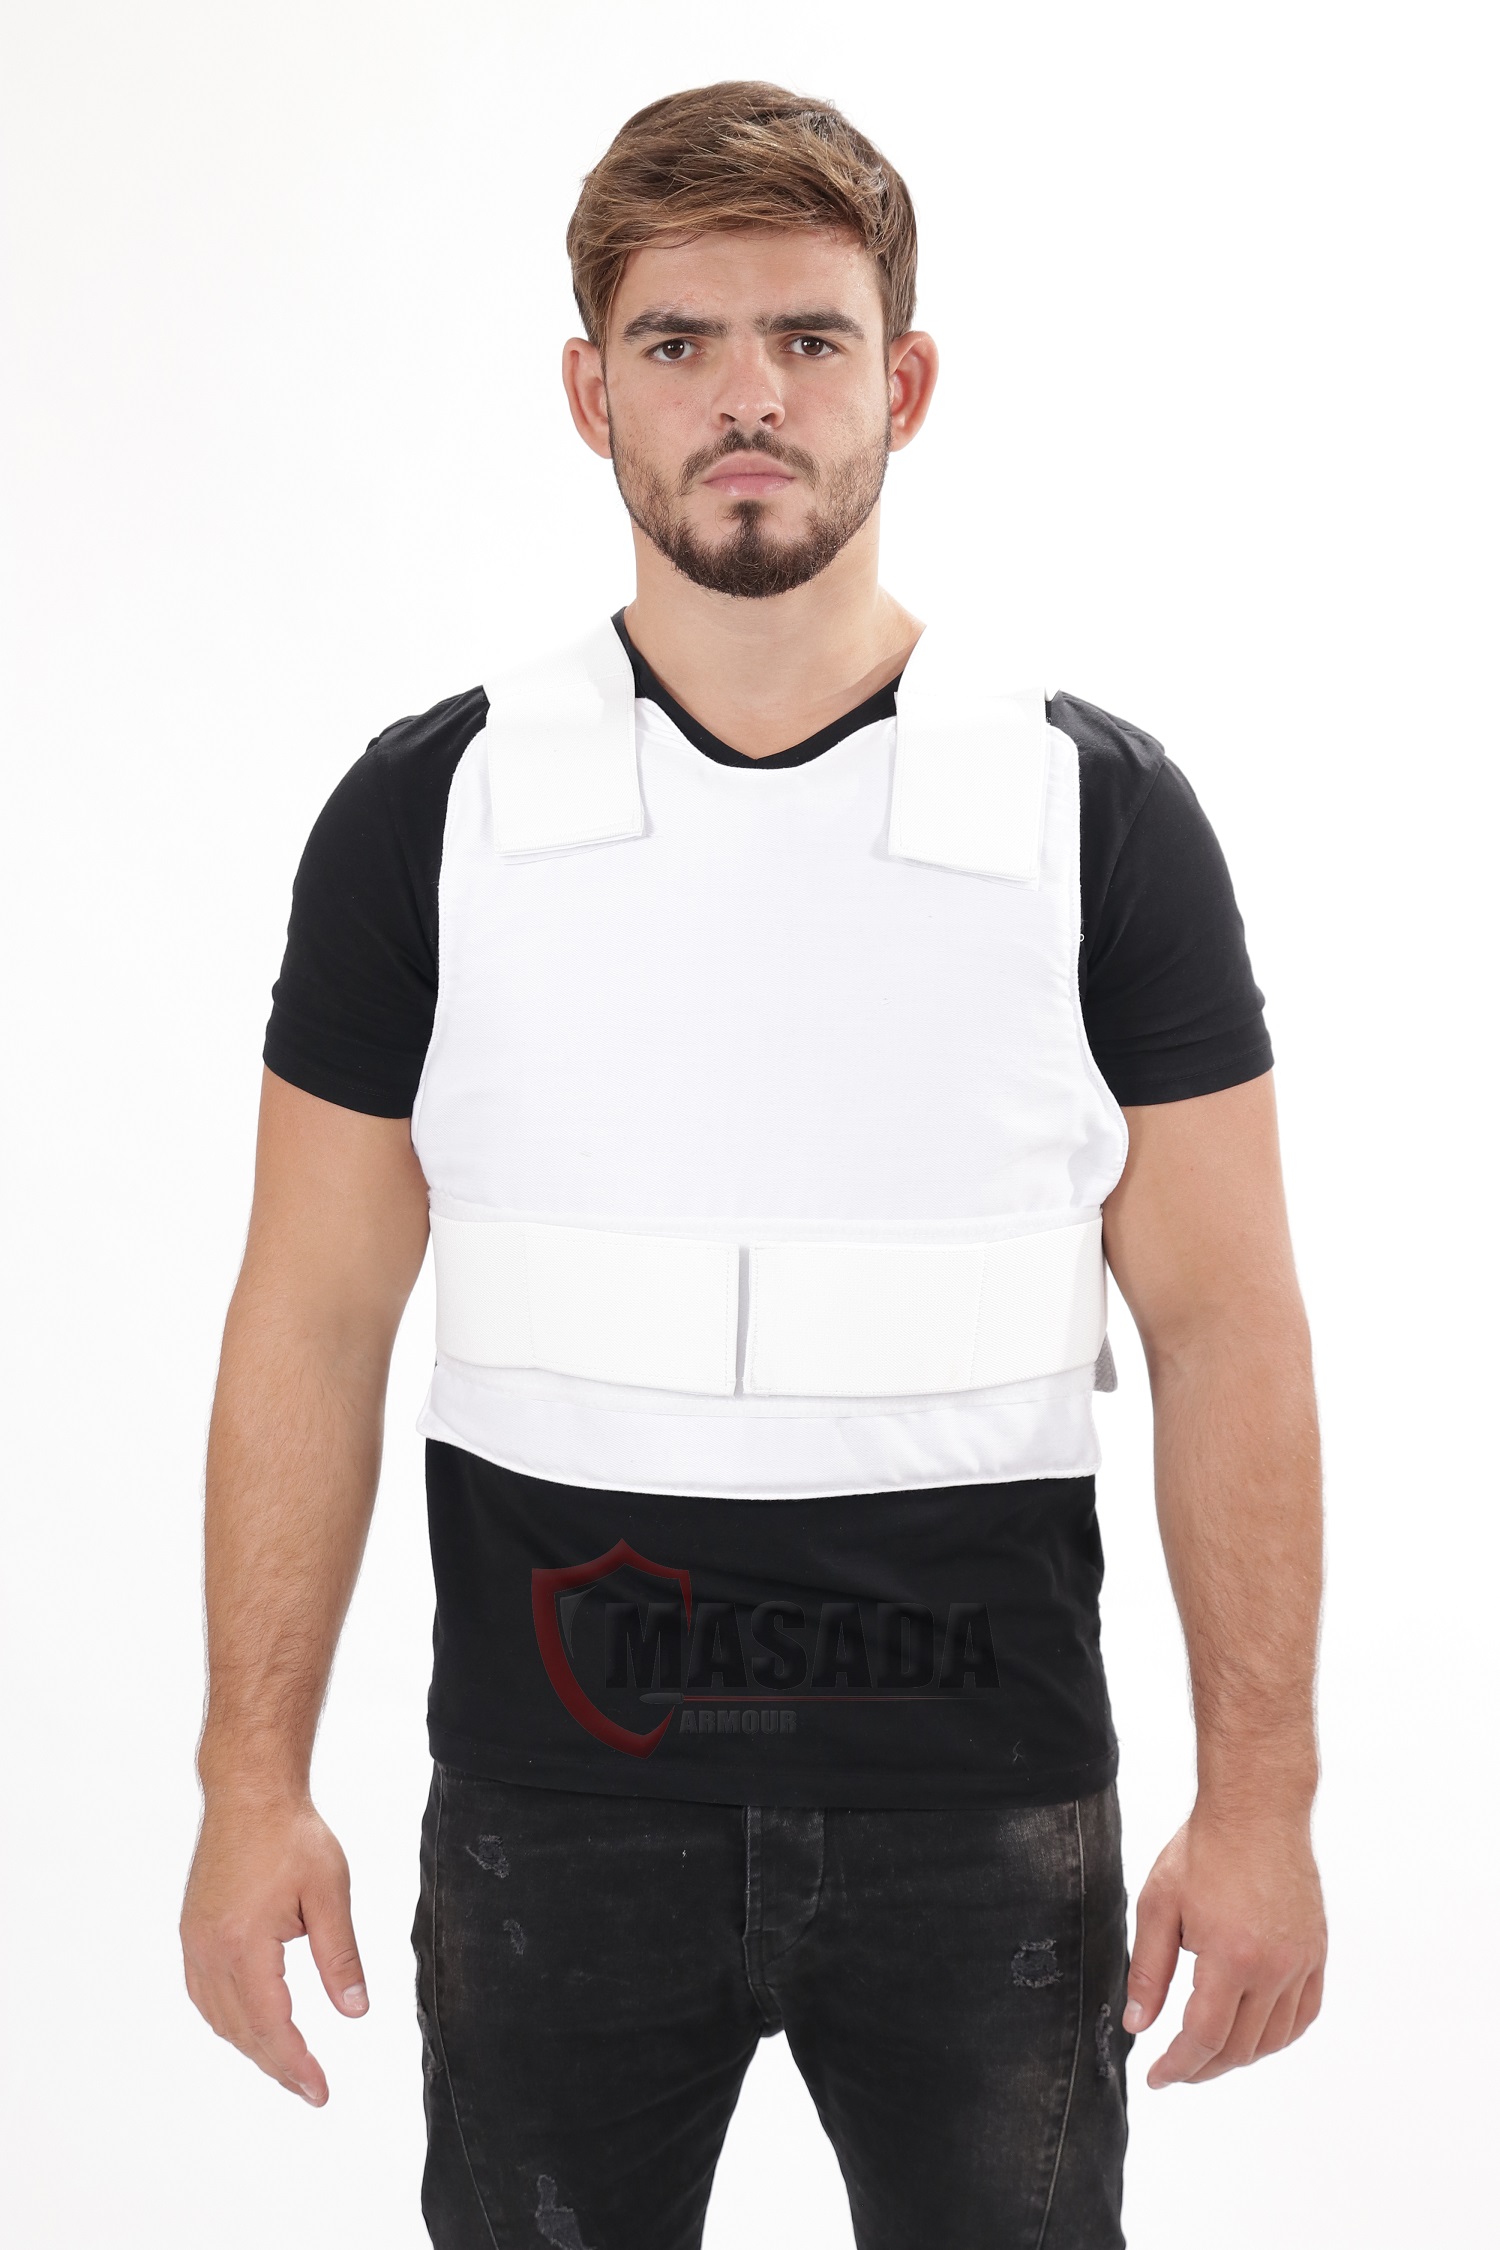 Civilian bulletproof vest/ Vip vest white